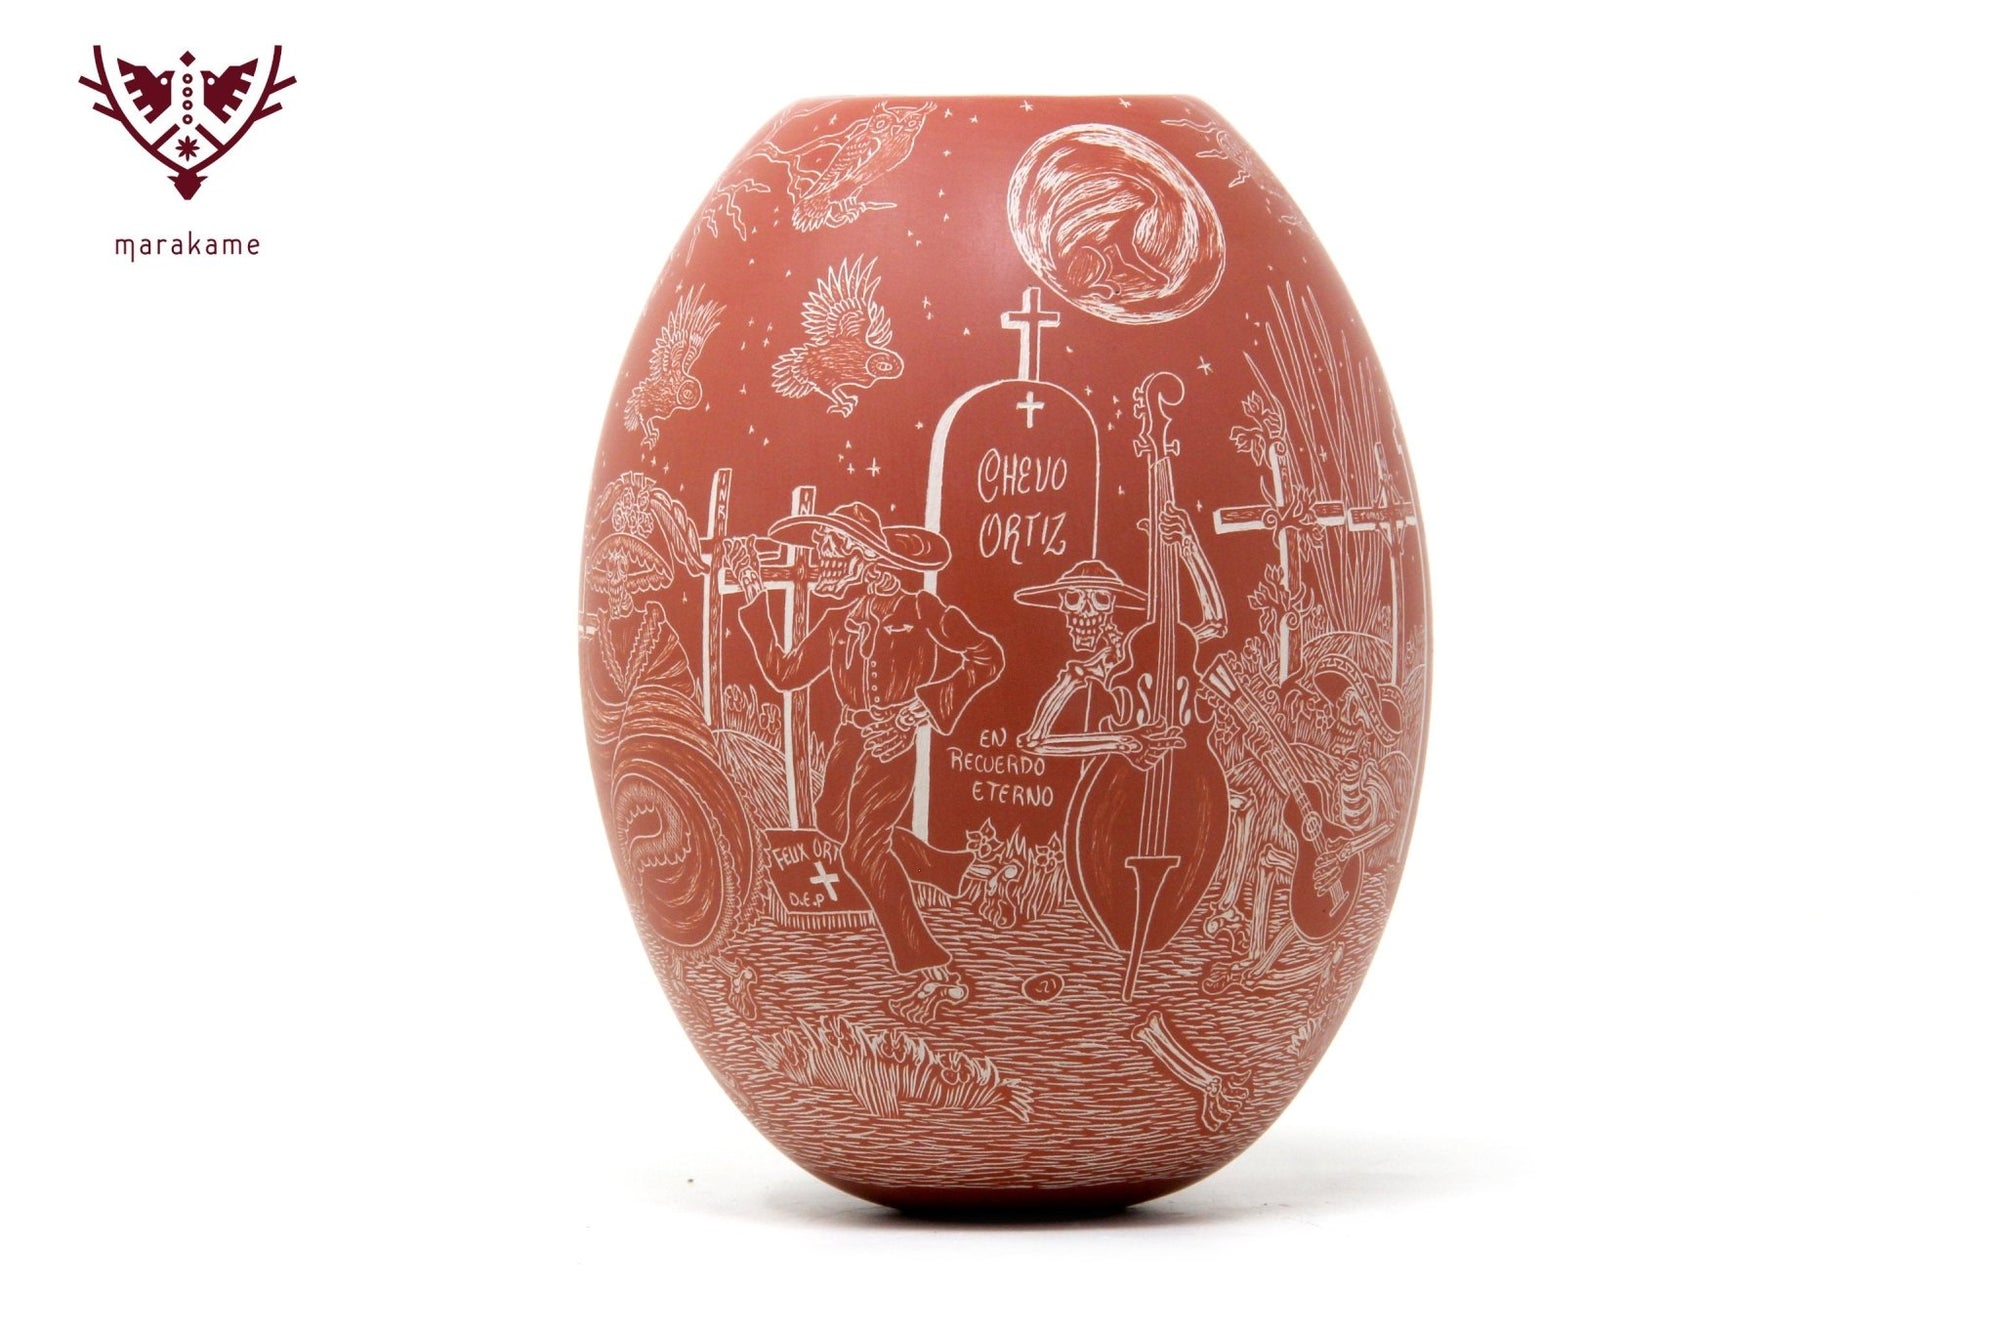 Mata Ortiz ceramic - Day of the dead - dancing to life / night - Huichol art - Marakame